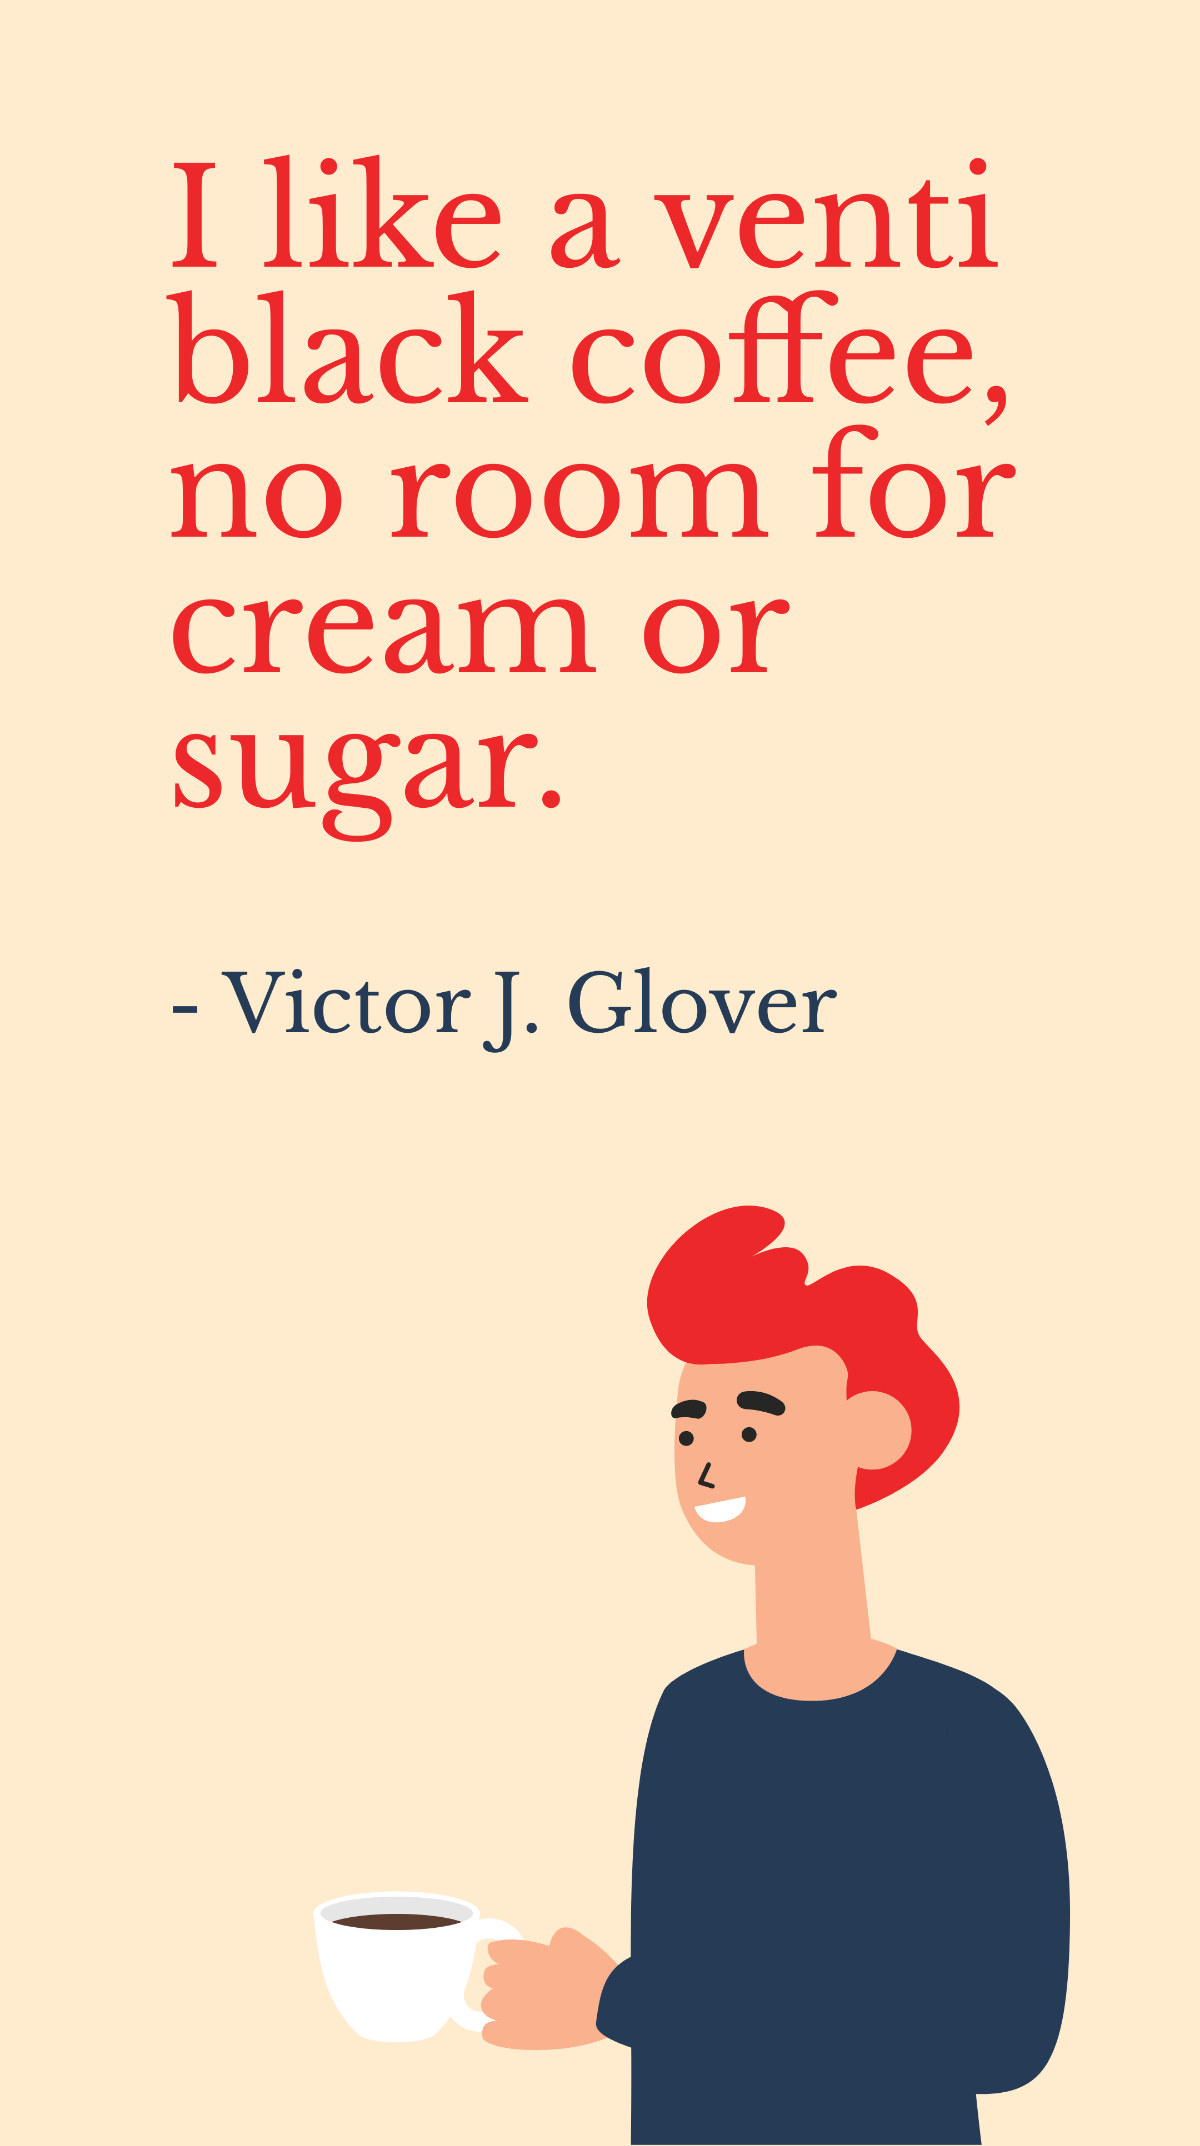 Victor J. Glover - I like a venti black coffee, no room for cream or sugar. Template